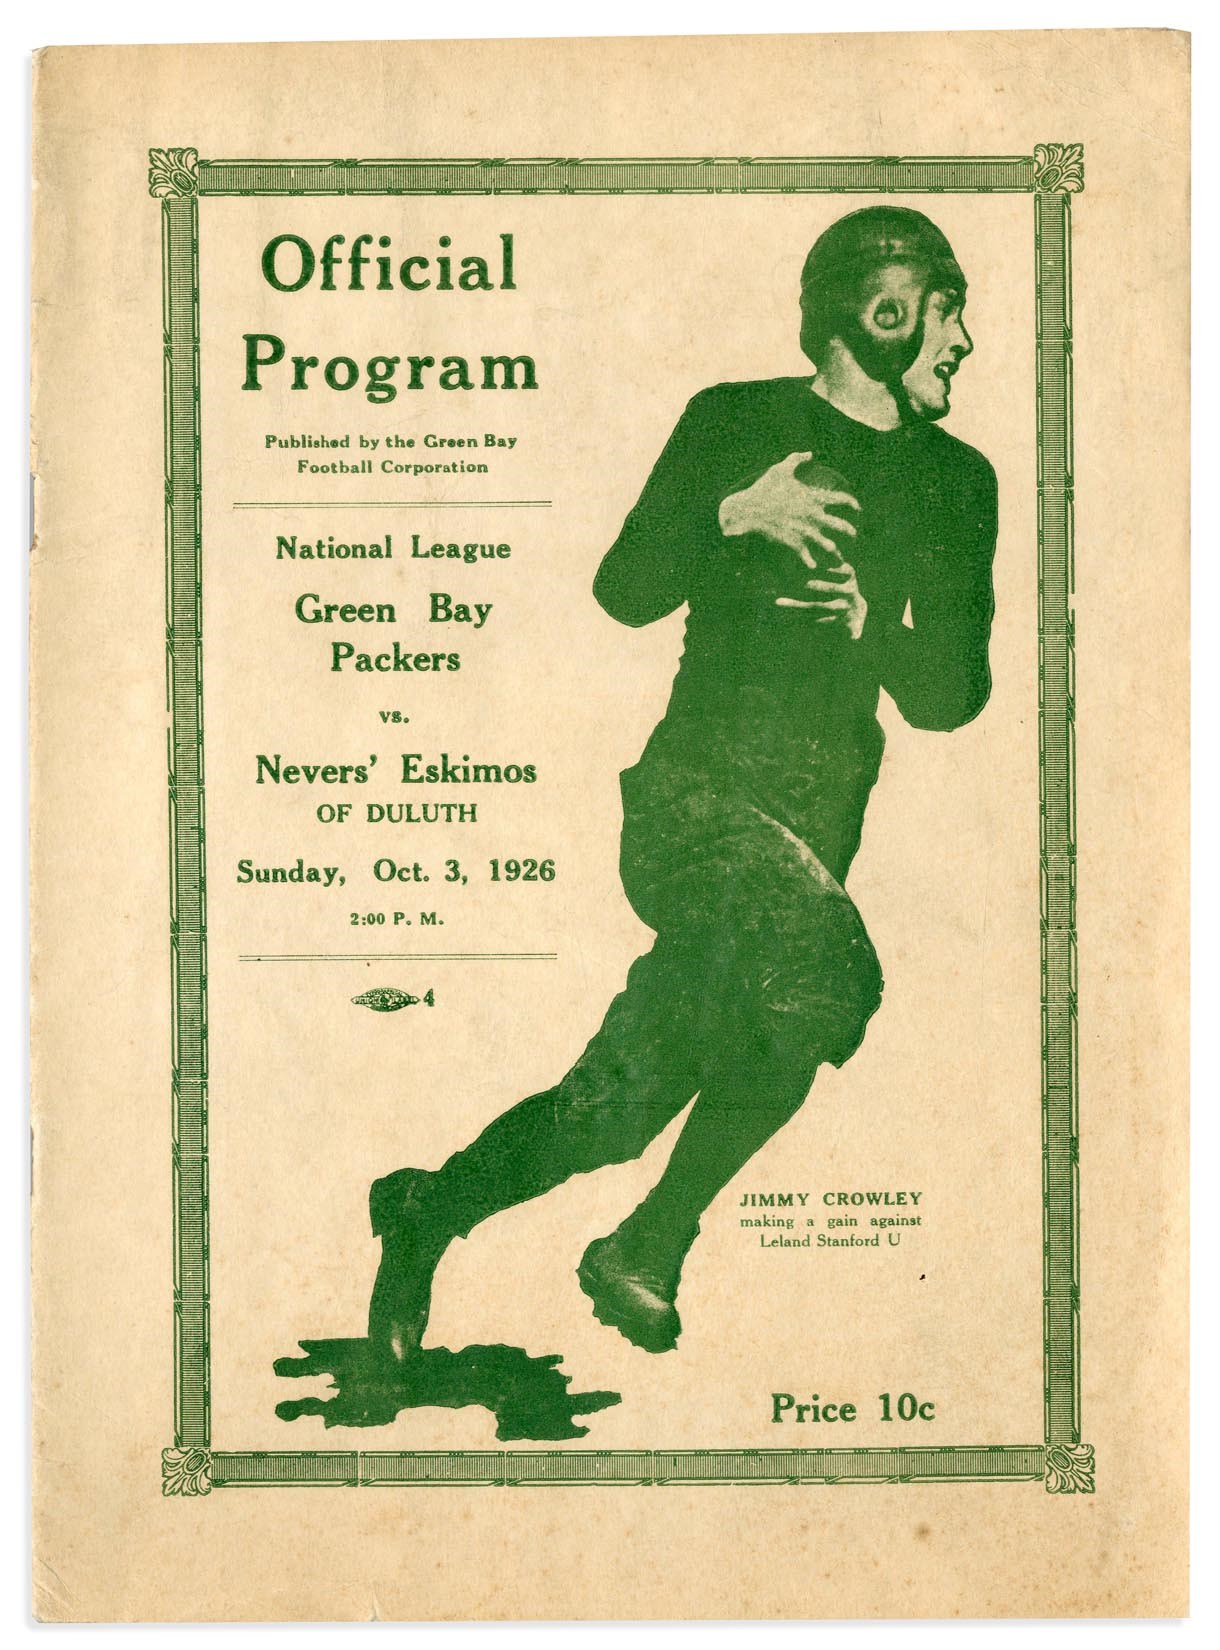 - 1926 Green Bay Packers vs. Duluth Eskimos 0-0 Tie Game Program